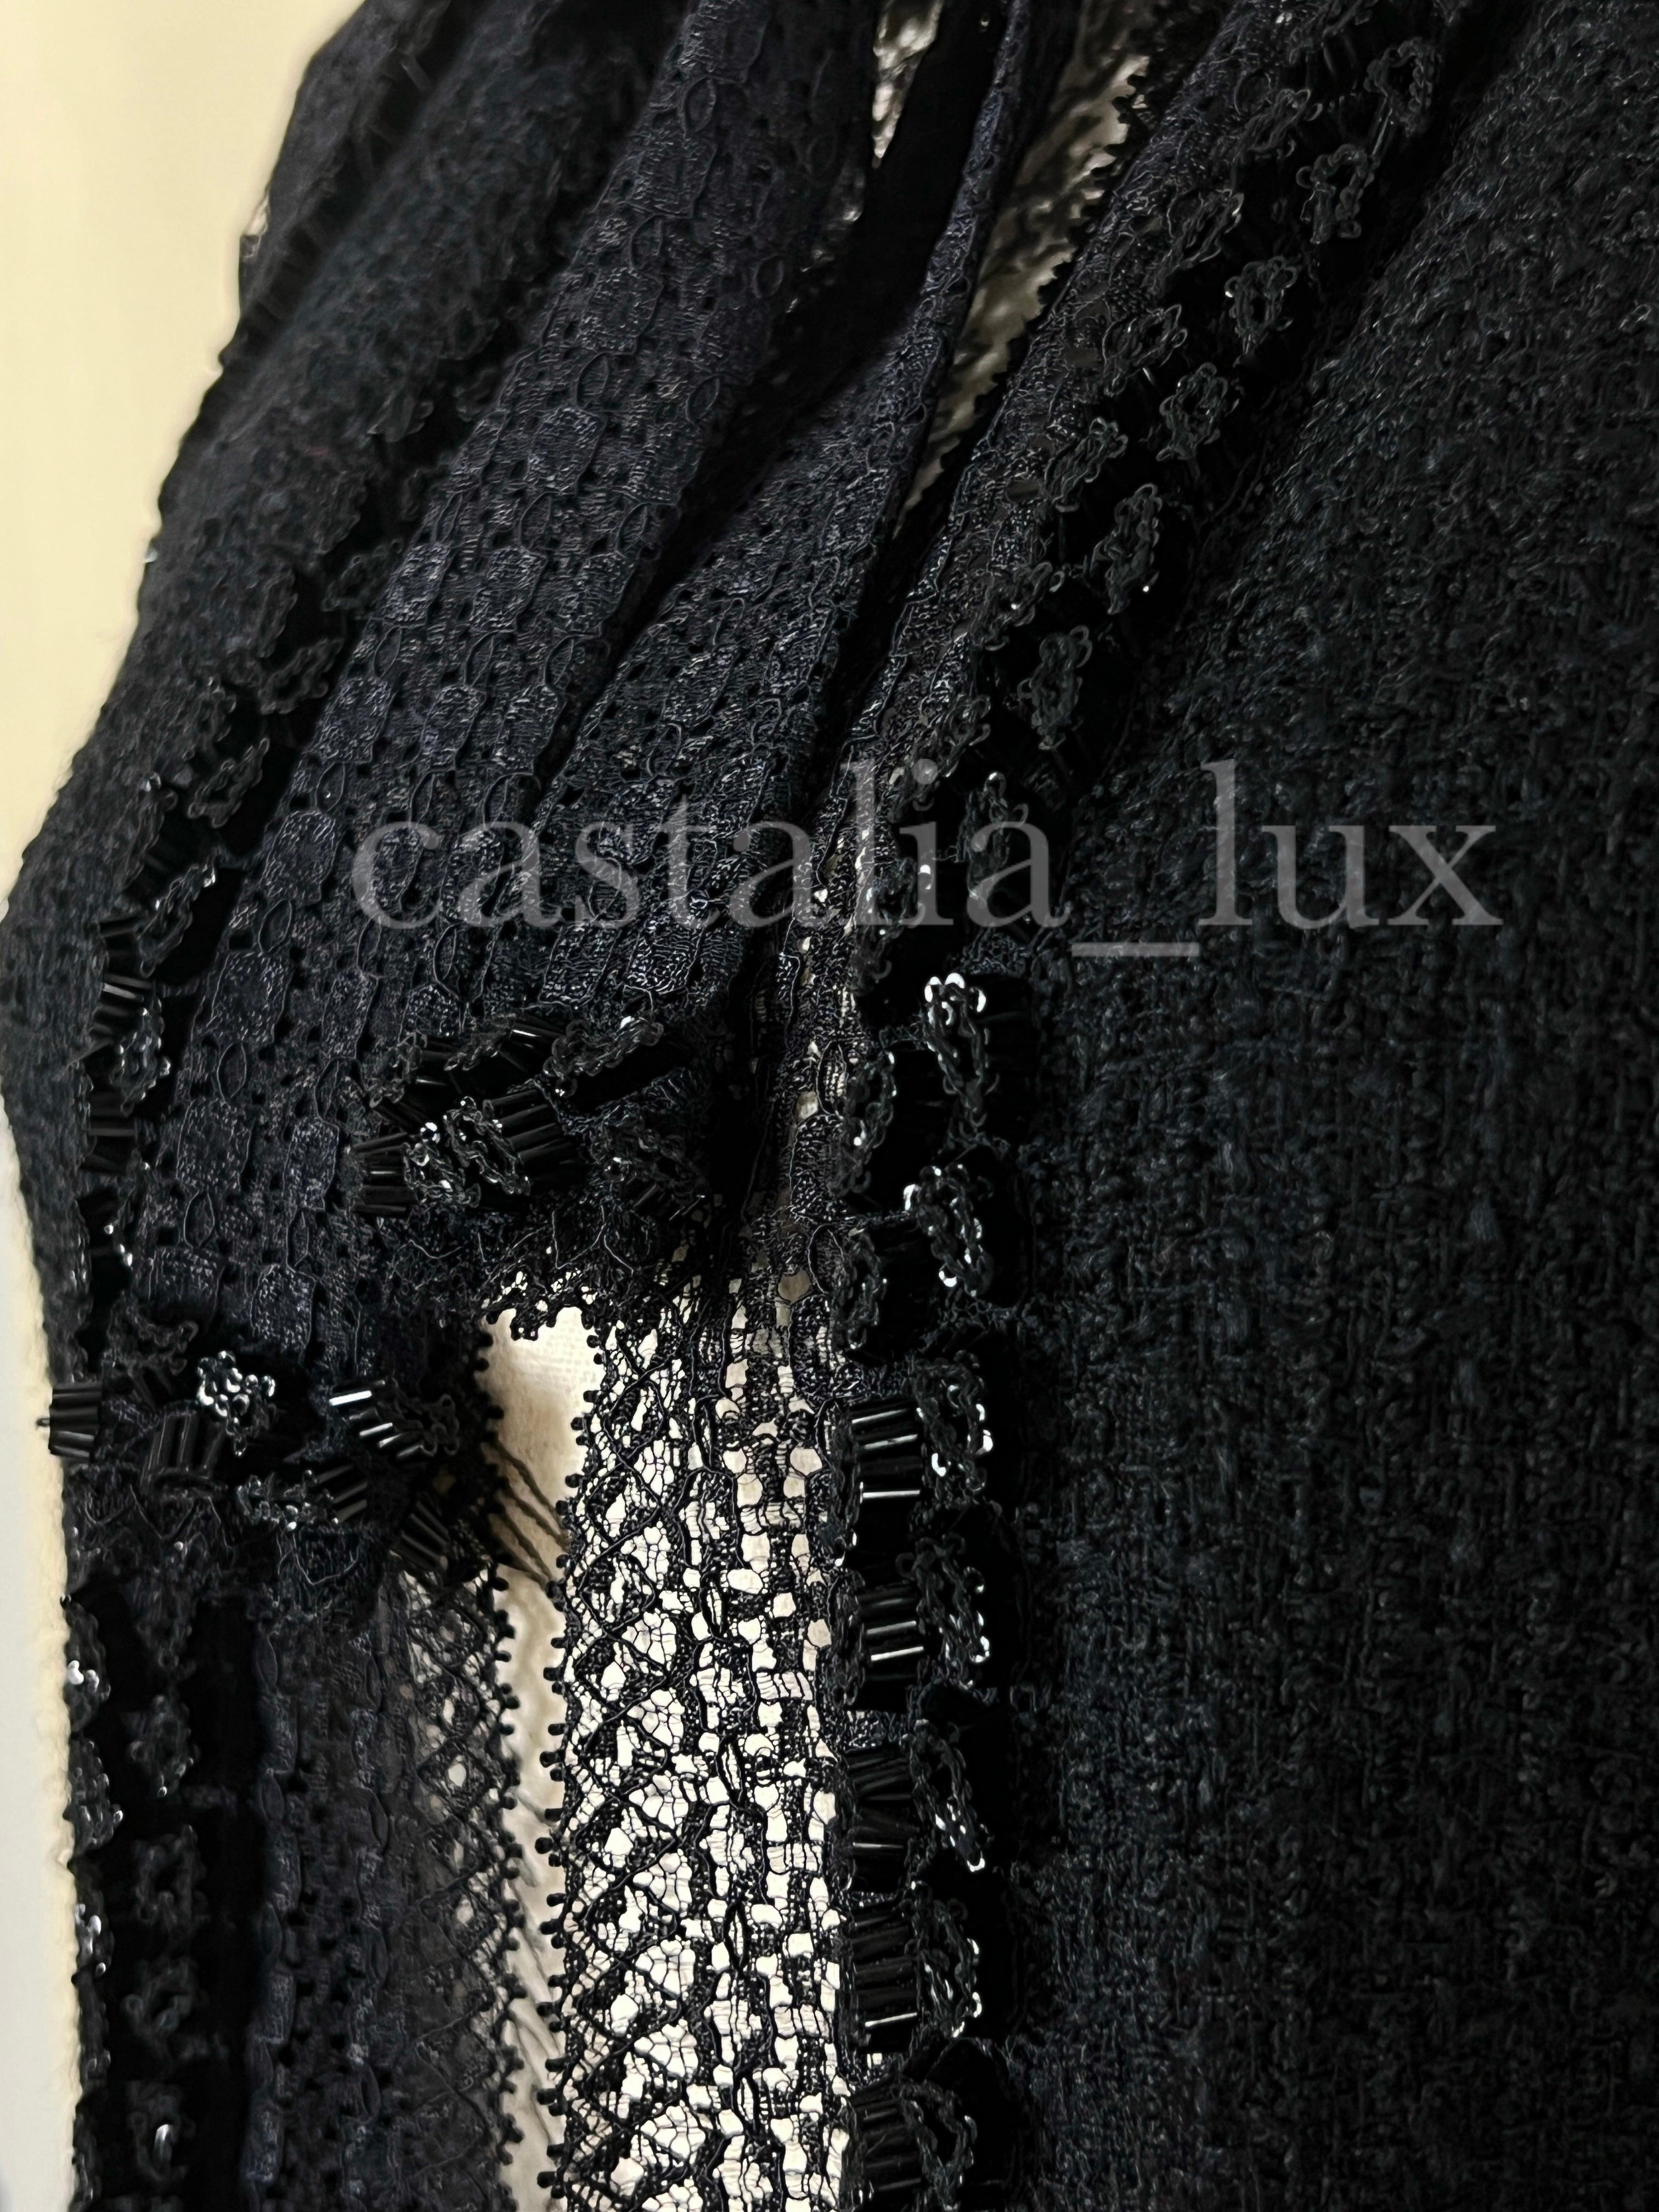 Chanel Paris / Miami CC Heart Buttons Black Tweed Jacket 16